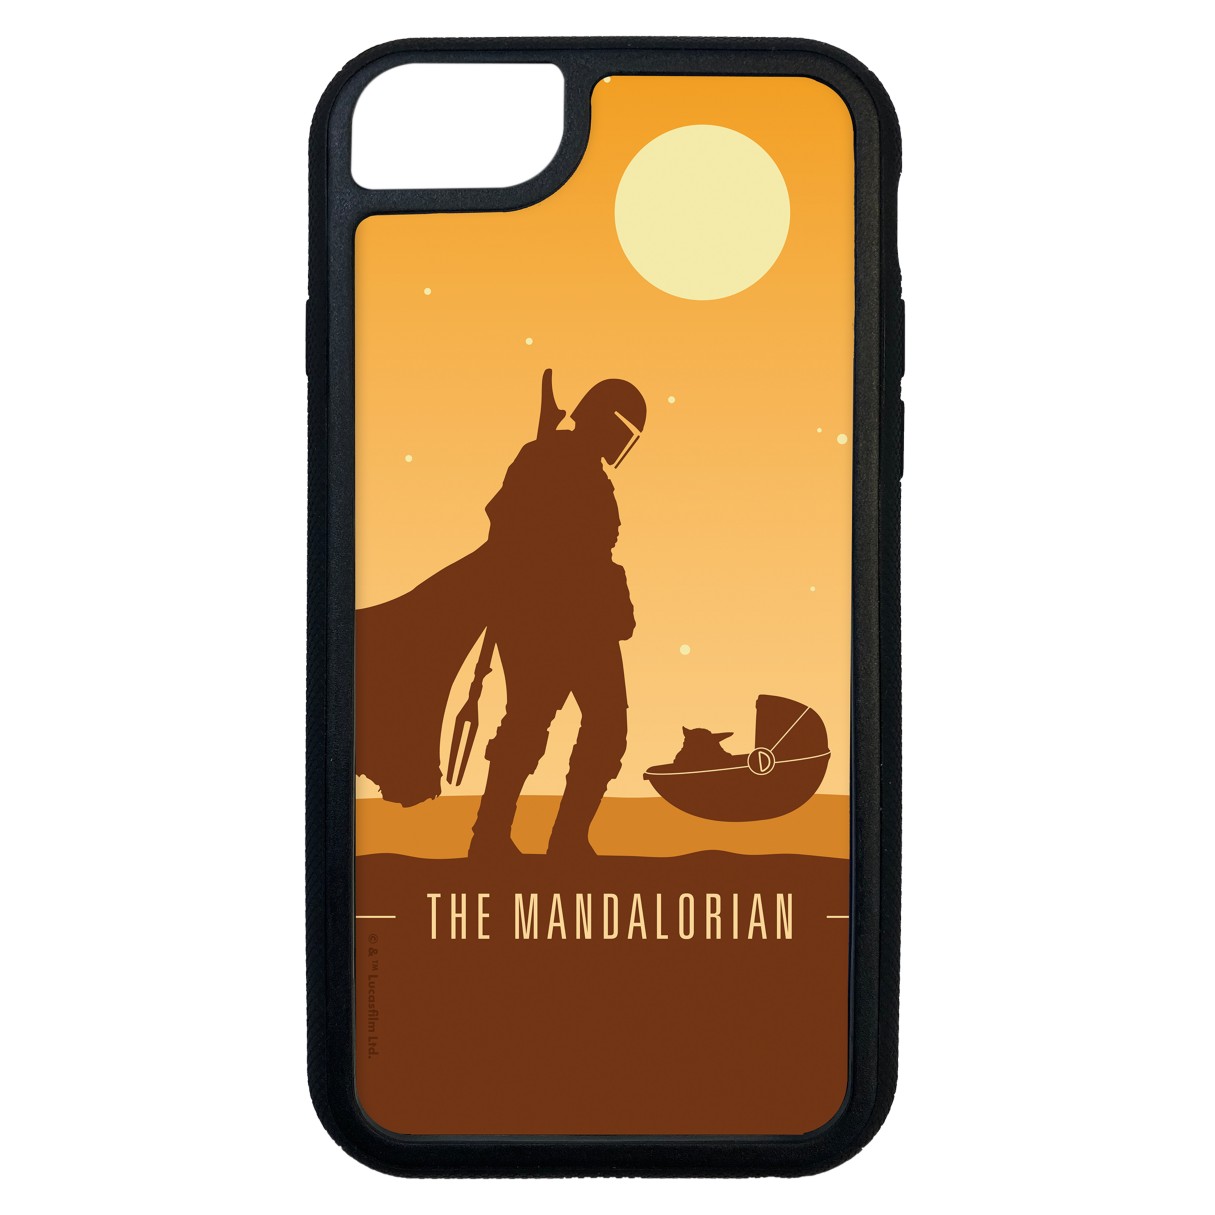 Star Wars: The Mandalorian iPhone 6/6s/7/8 Case